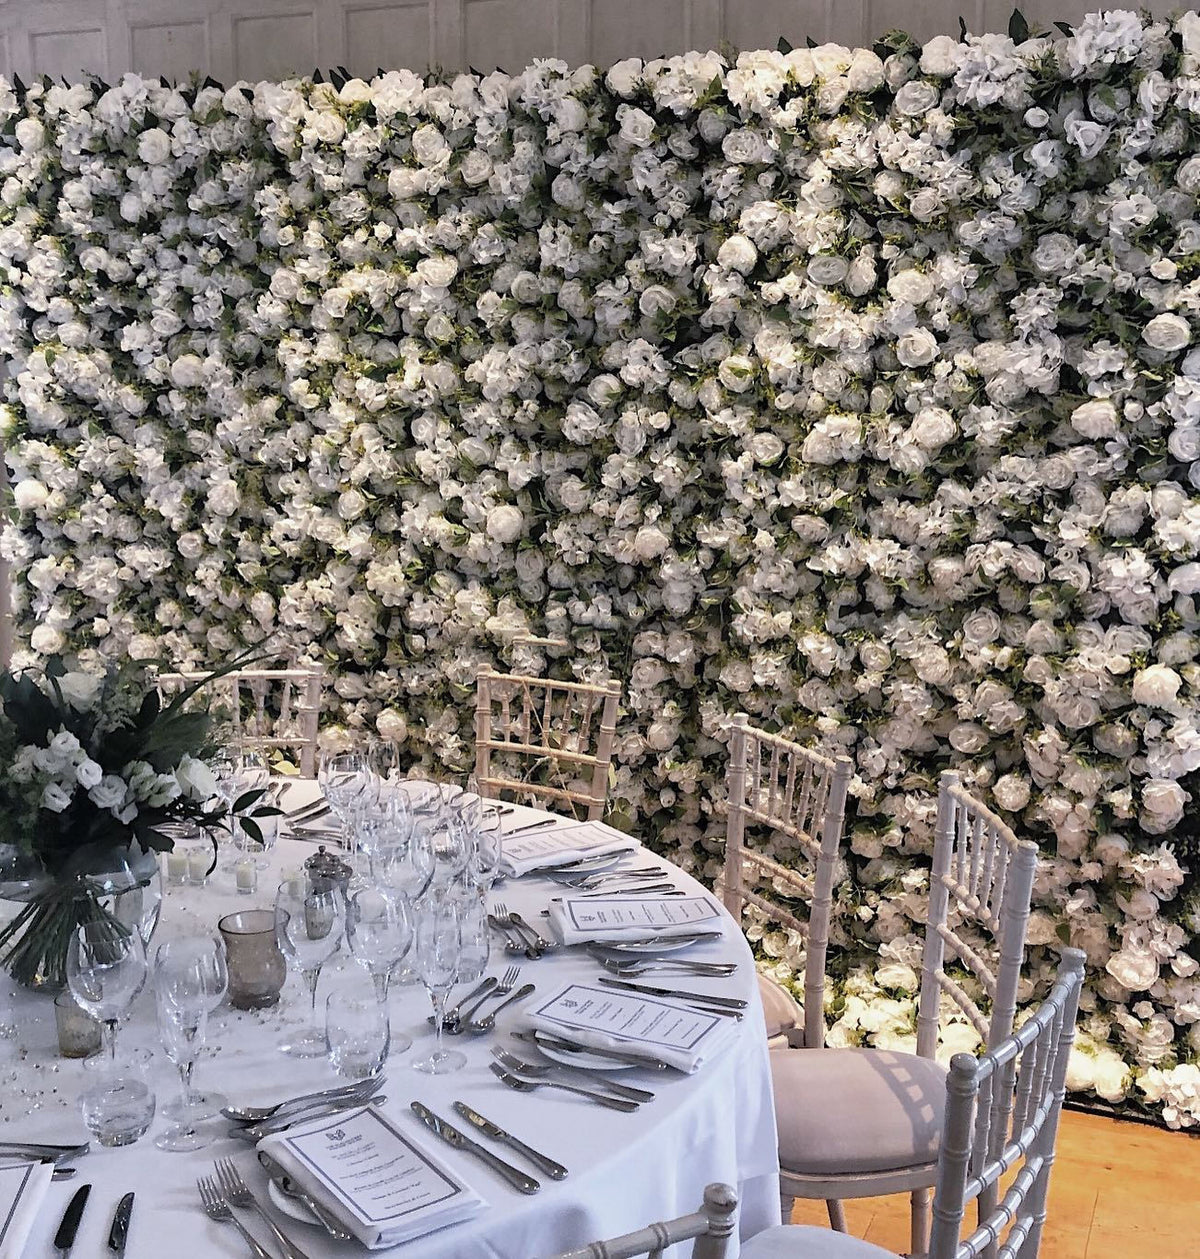 3D Artificial Flower Wall Arrangement Wedding Party Birthday Backdrop Decor HQ3754